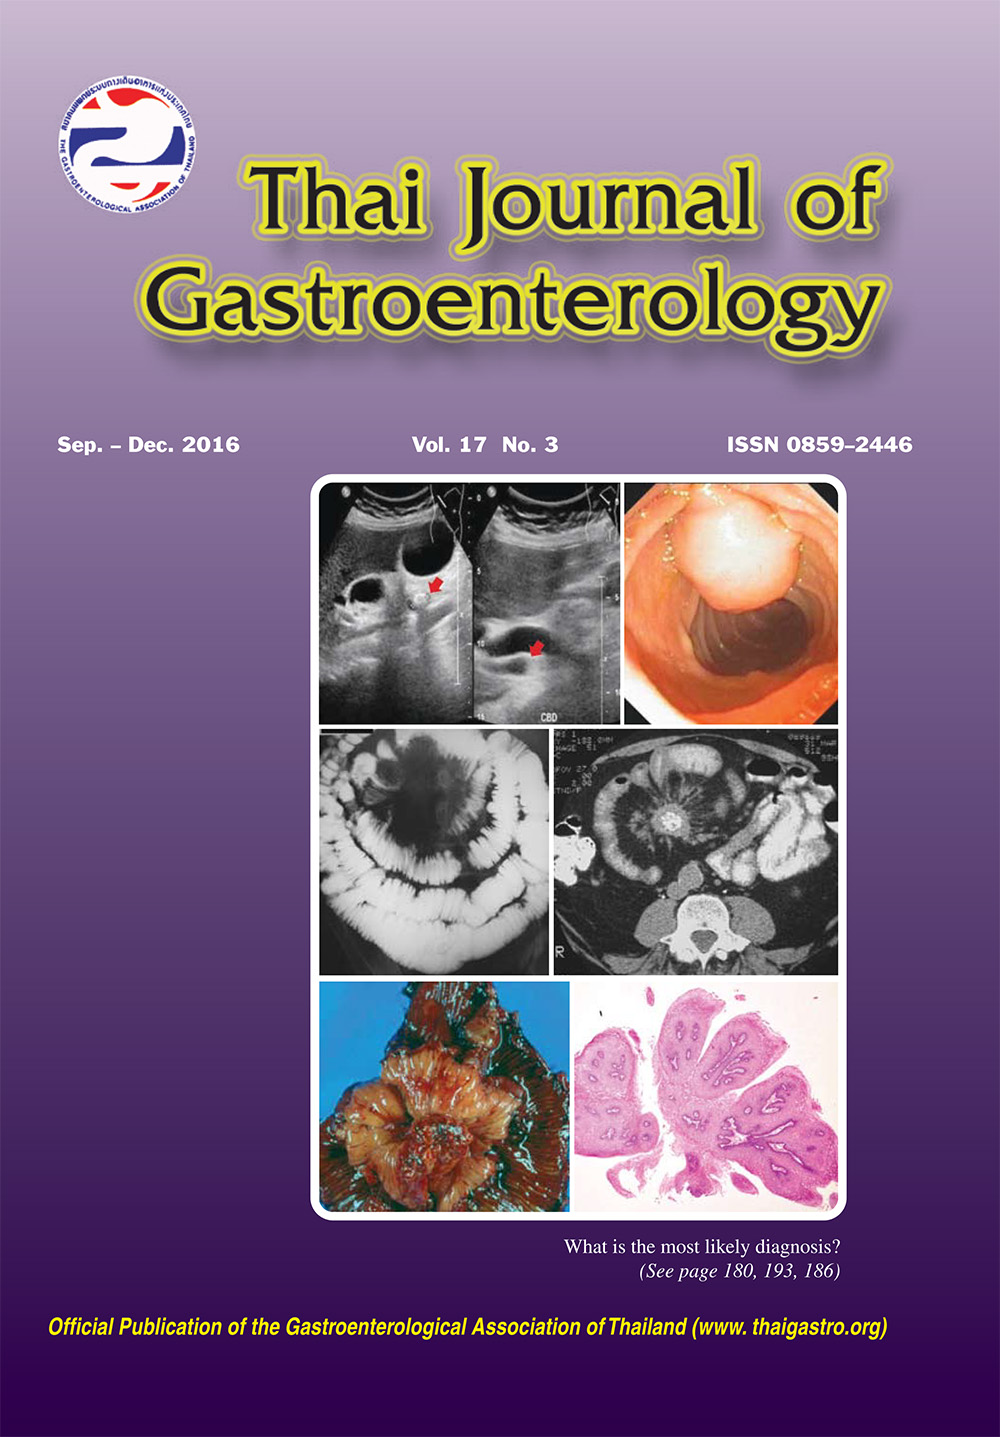 file/Thai-Journal-of-gastroenterology-images3428495.jpg